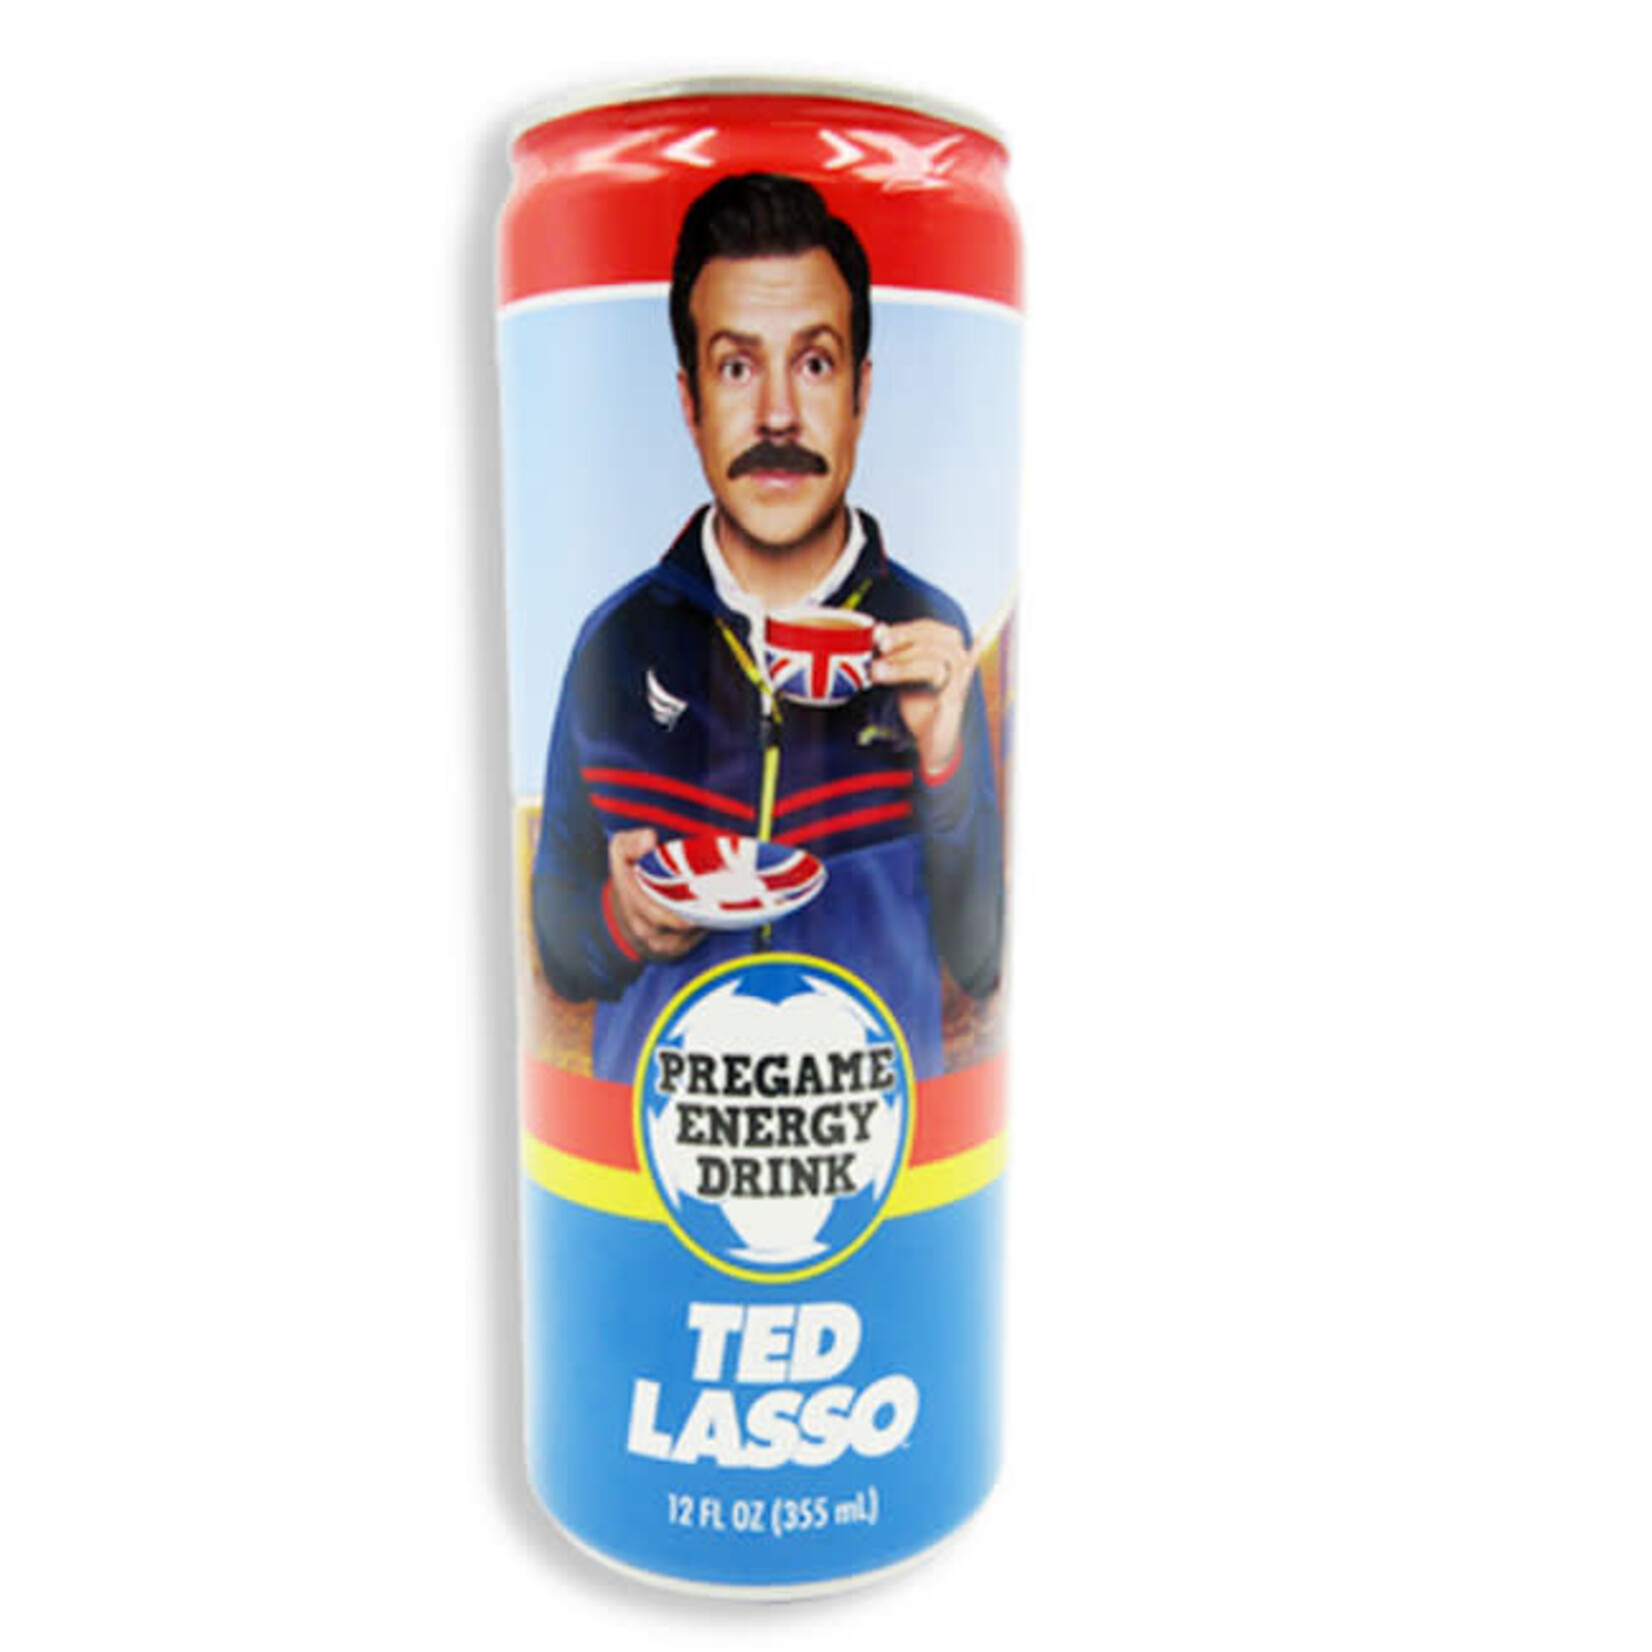 Redstone Ted Lasso Pregame Energy Drink